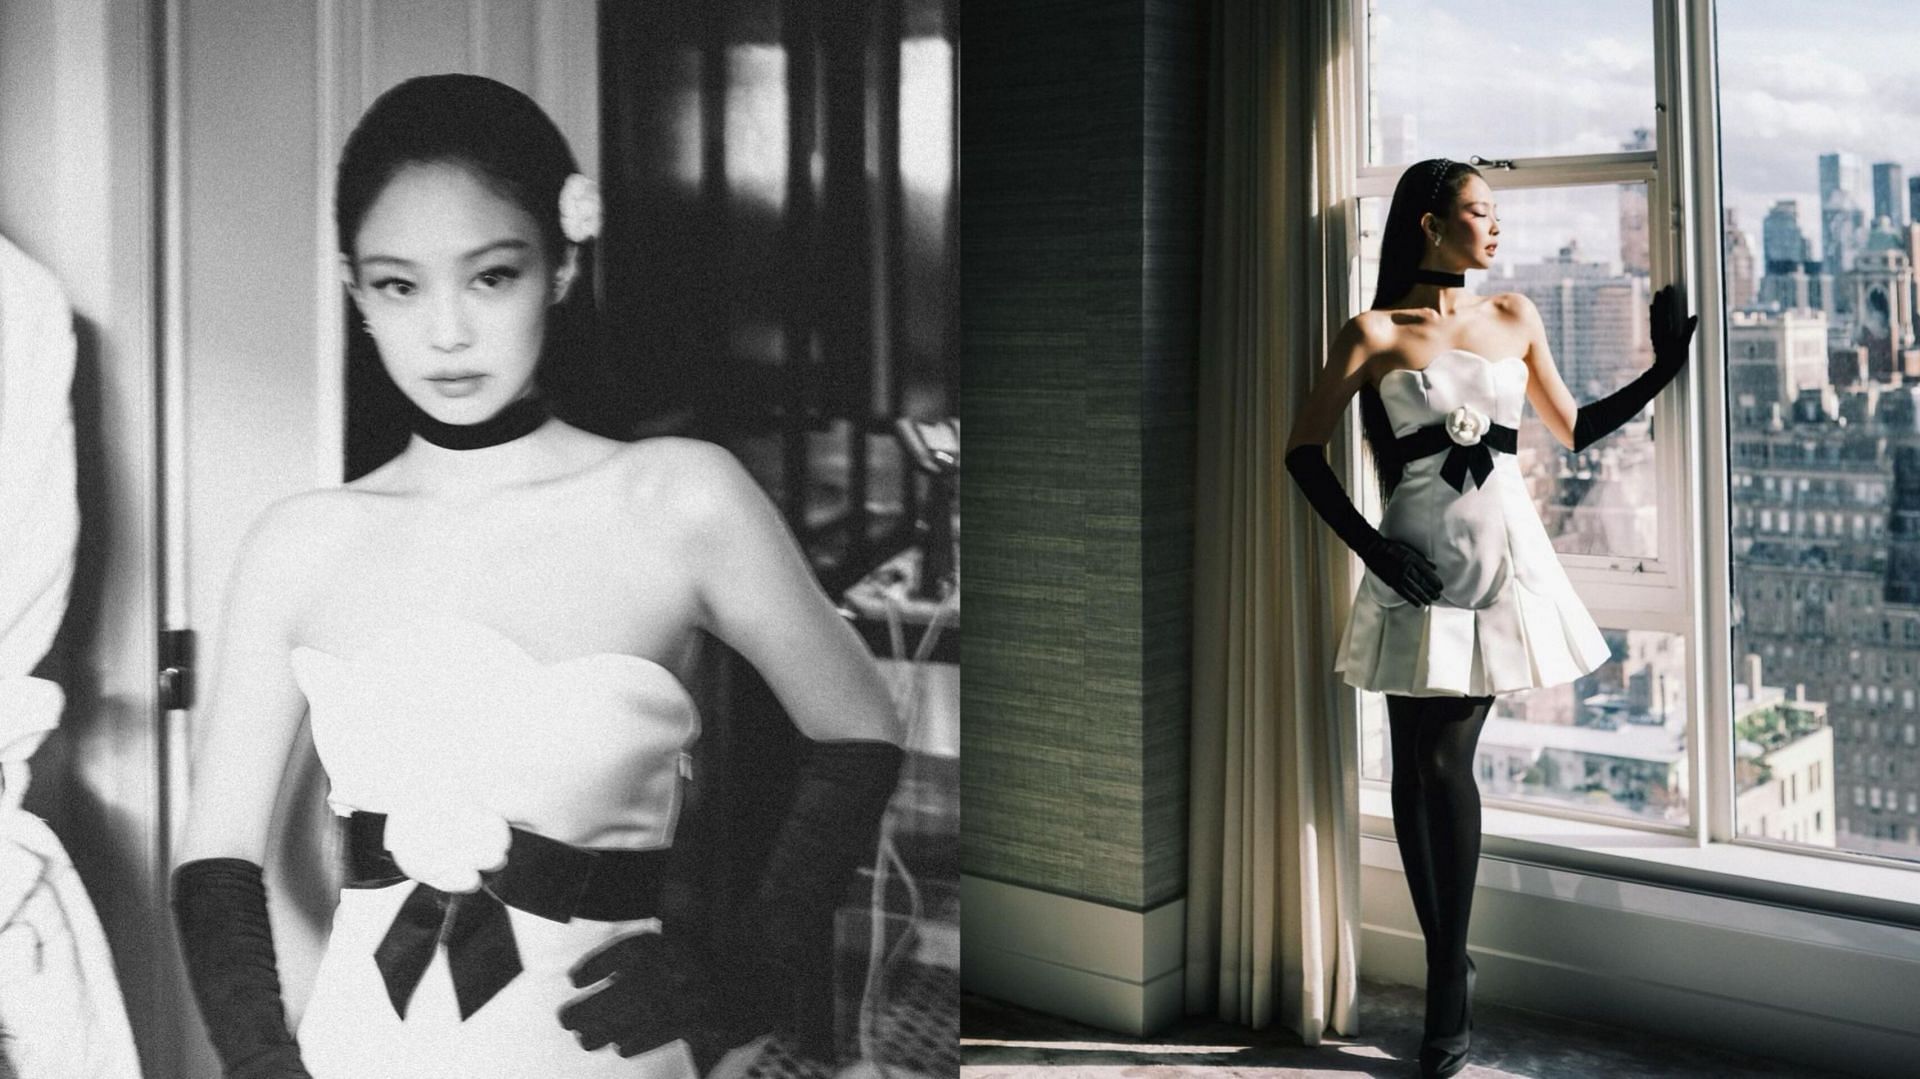 Jennie Kim Makes 2023 Met Gala Debut With '90s Vintage Chanel